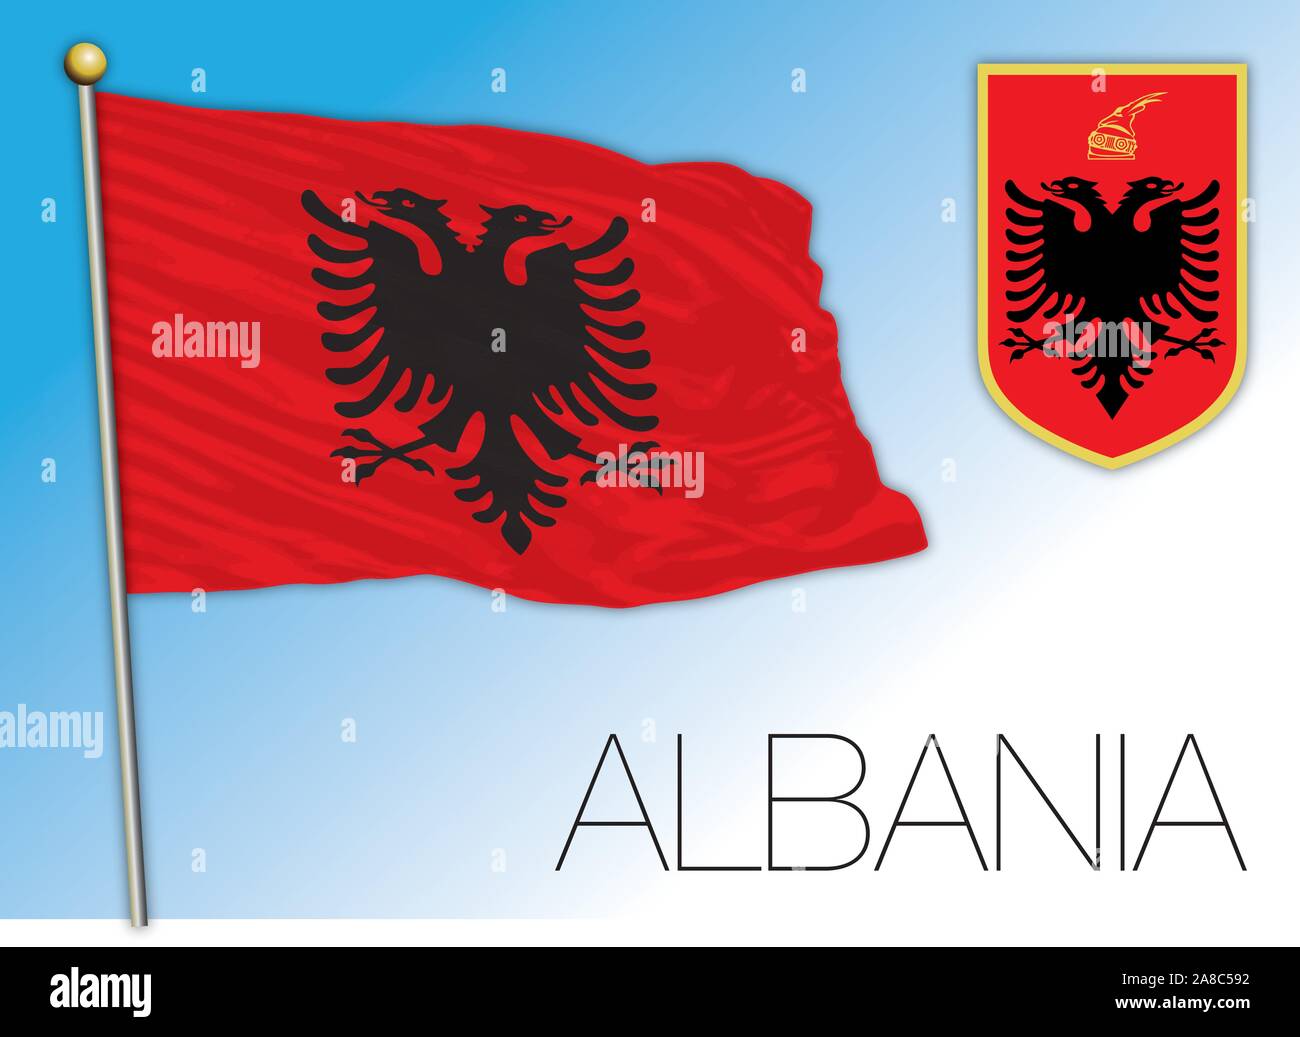 Albanien offizielle Flagge und Wappen, Vector Illustration Stock Vektor